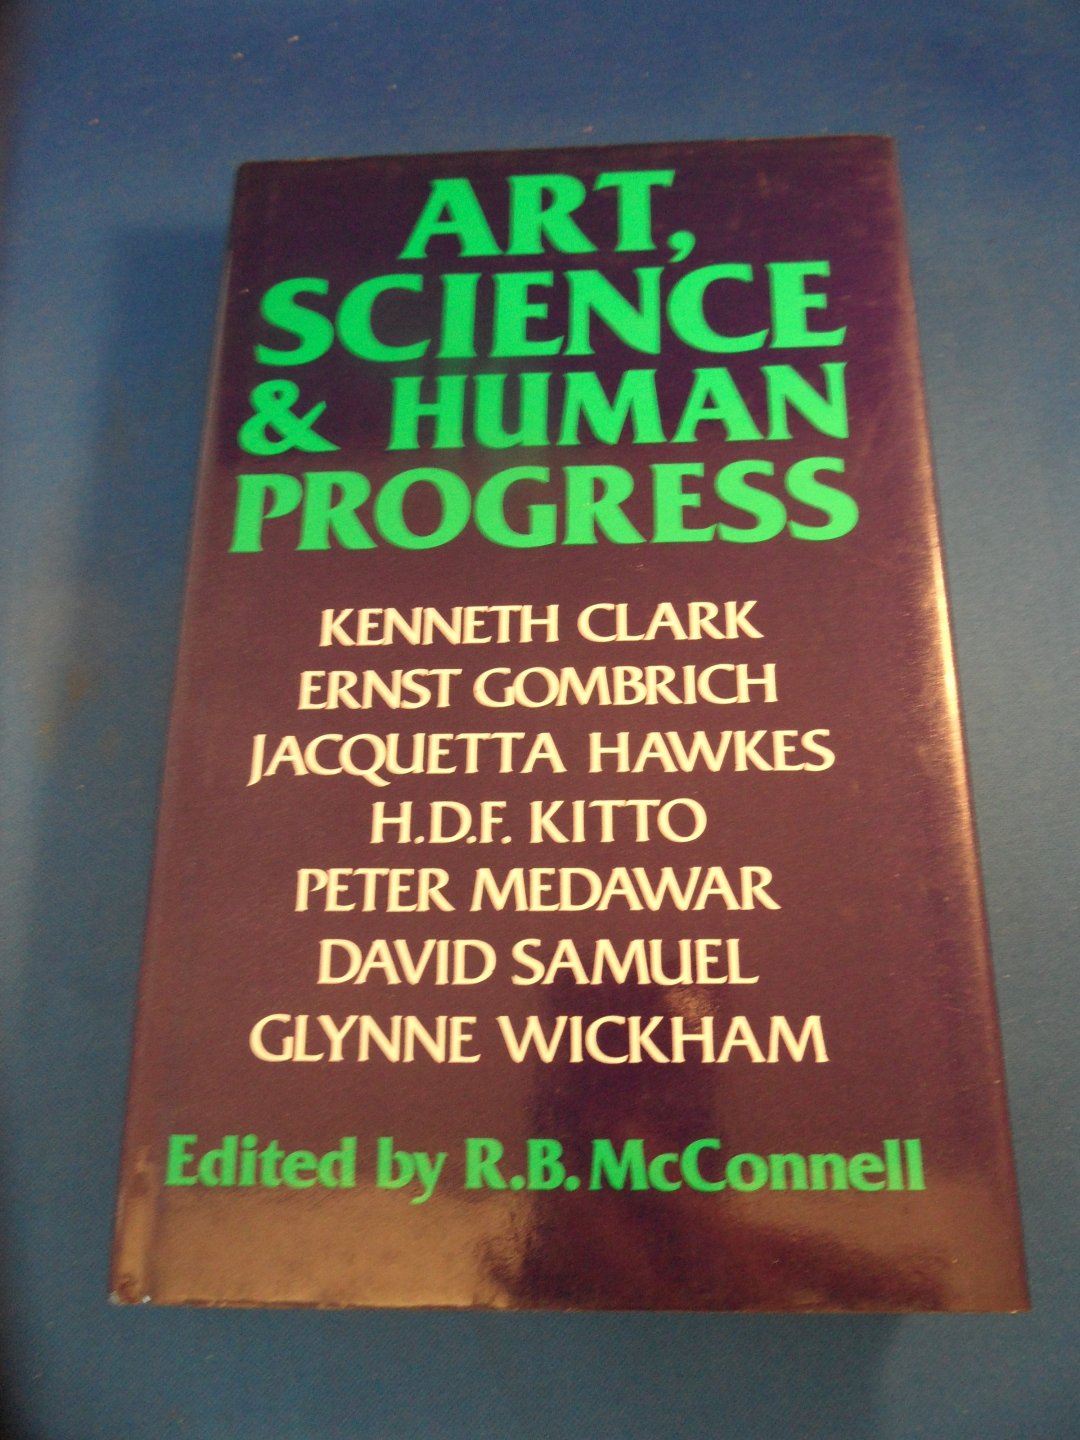 McConnell, R.B. (ed) - Art, Science & Human Progress. The Richard Bradford Trust Lectures 1975-1978